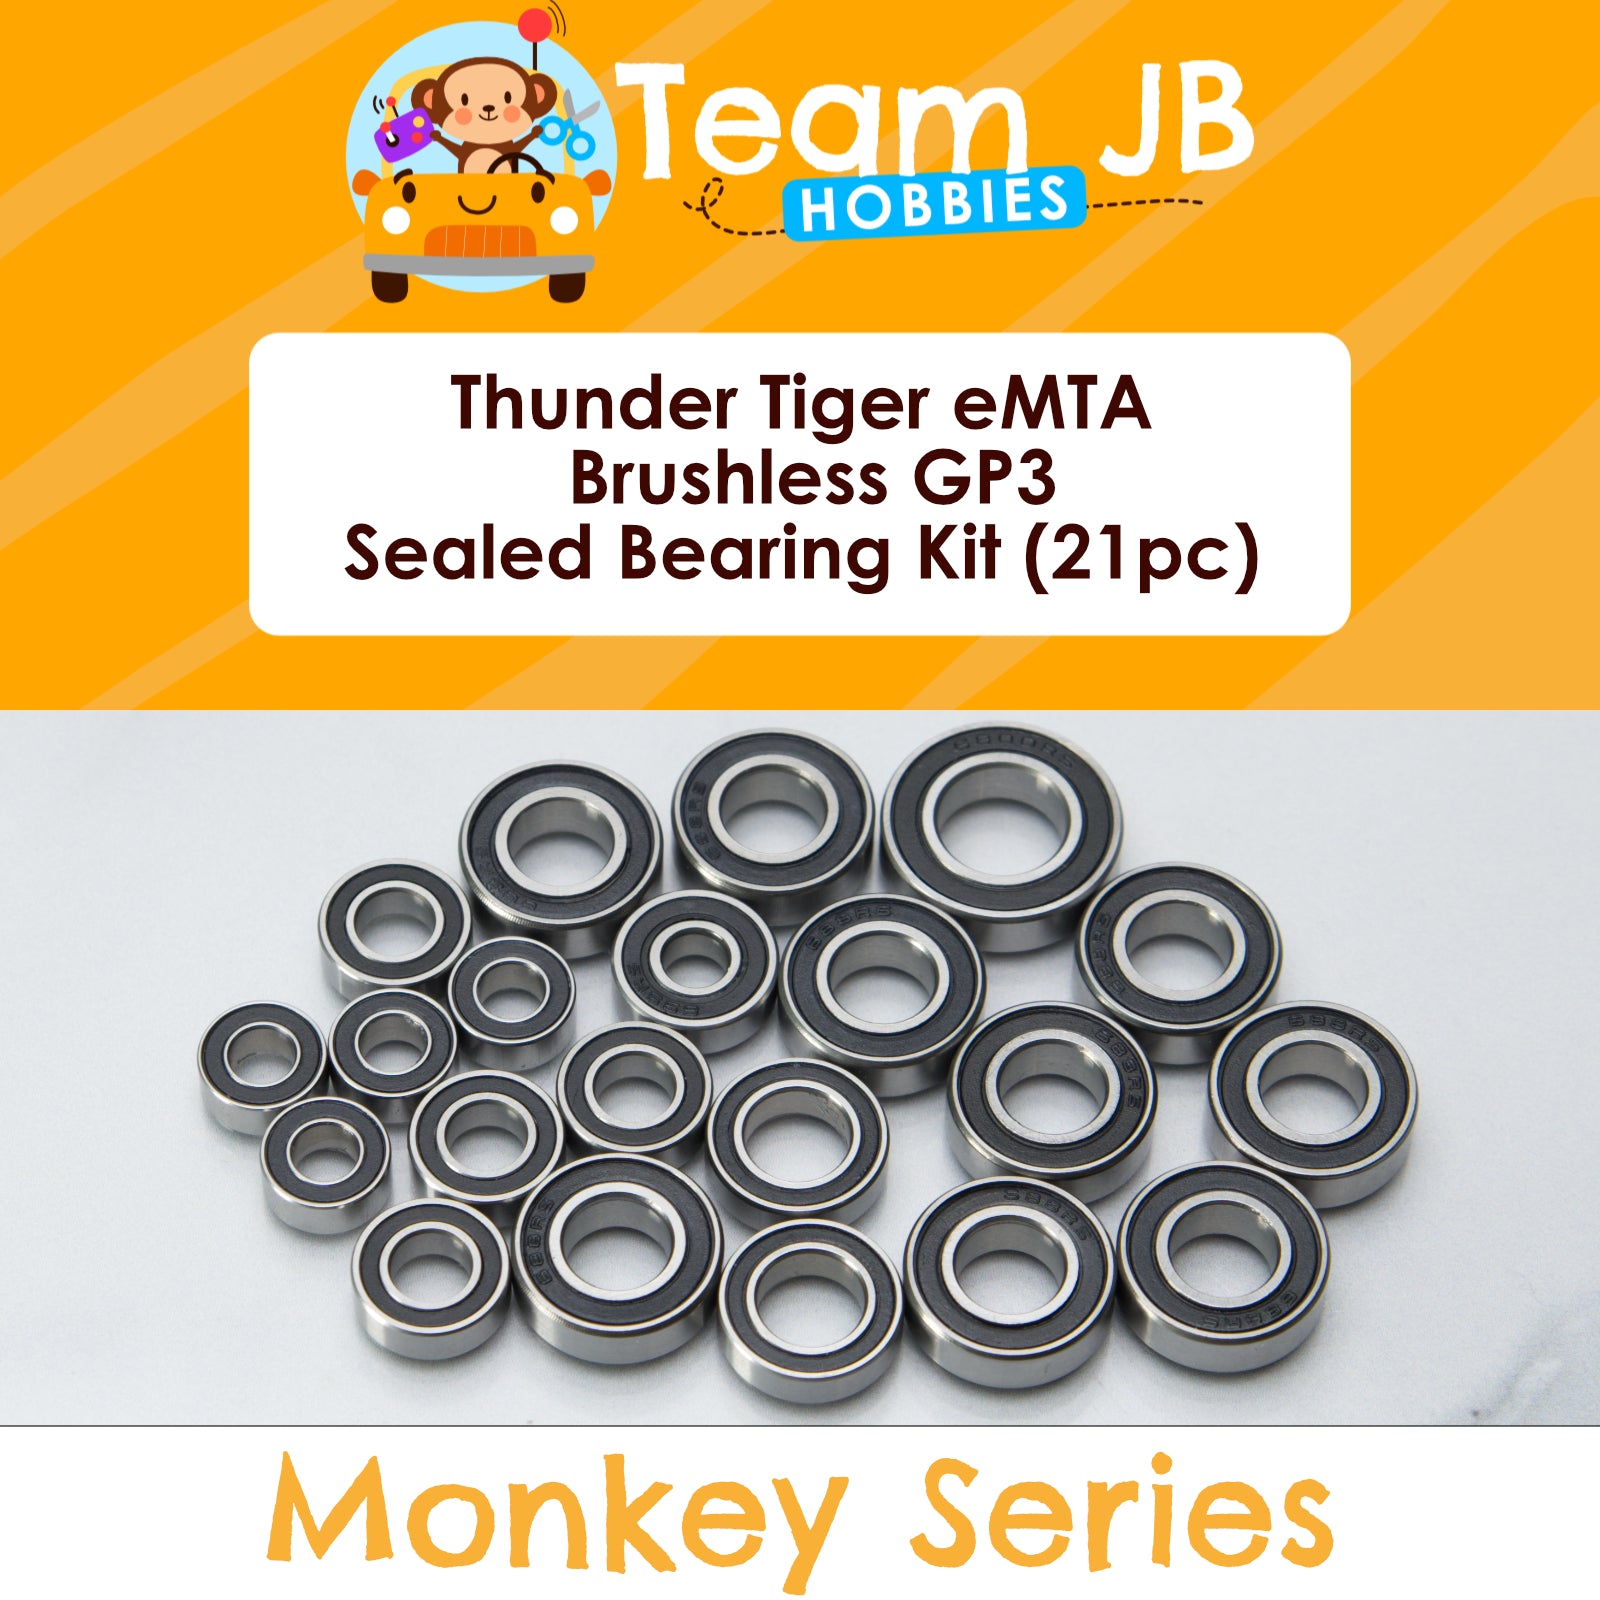 Thunder Tiger eMTA Brushless GP3 - Sealed Bearing Kit